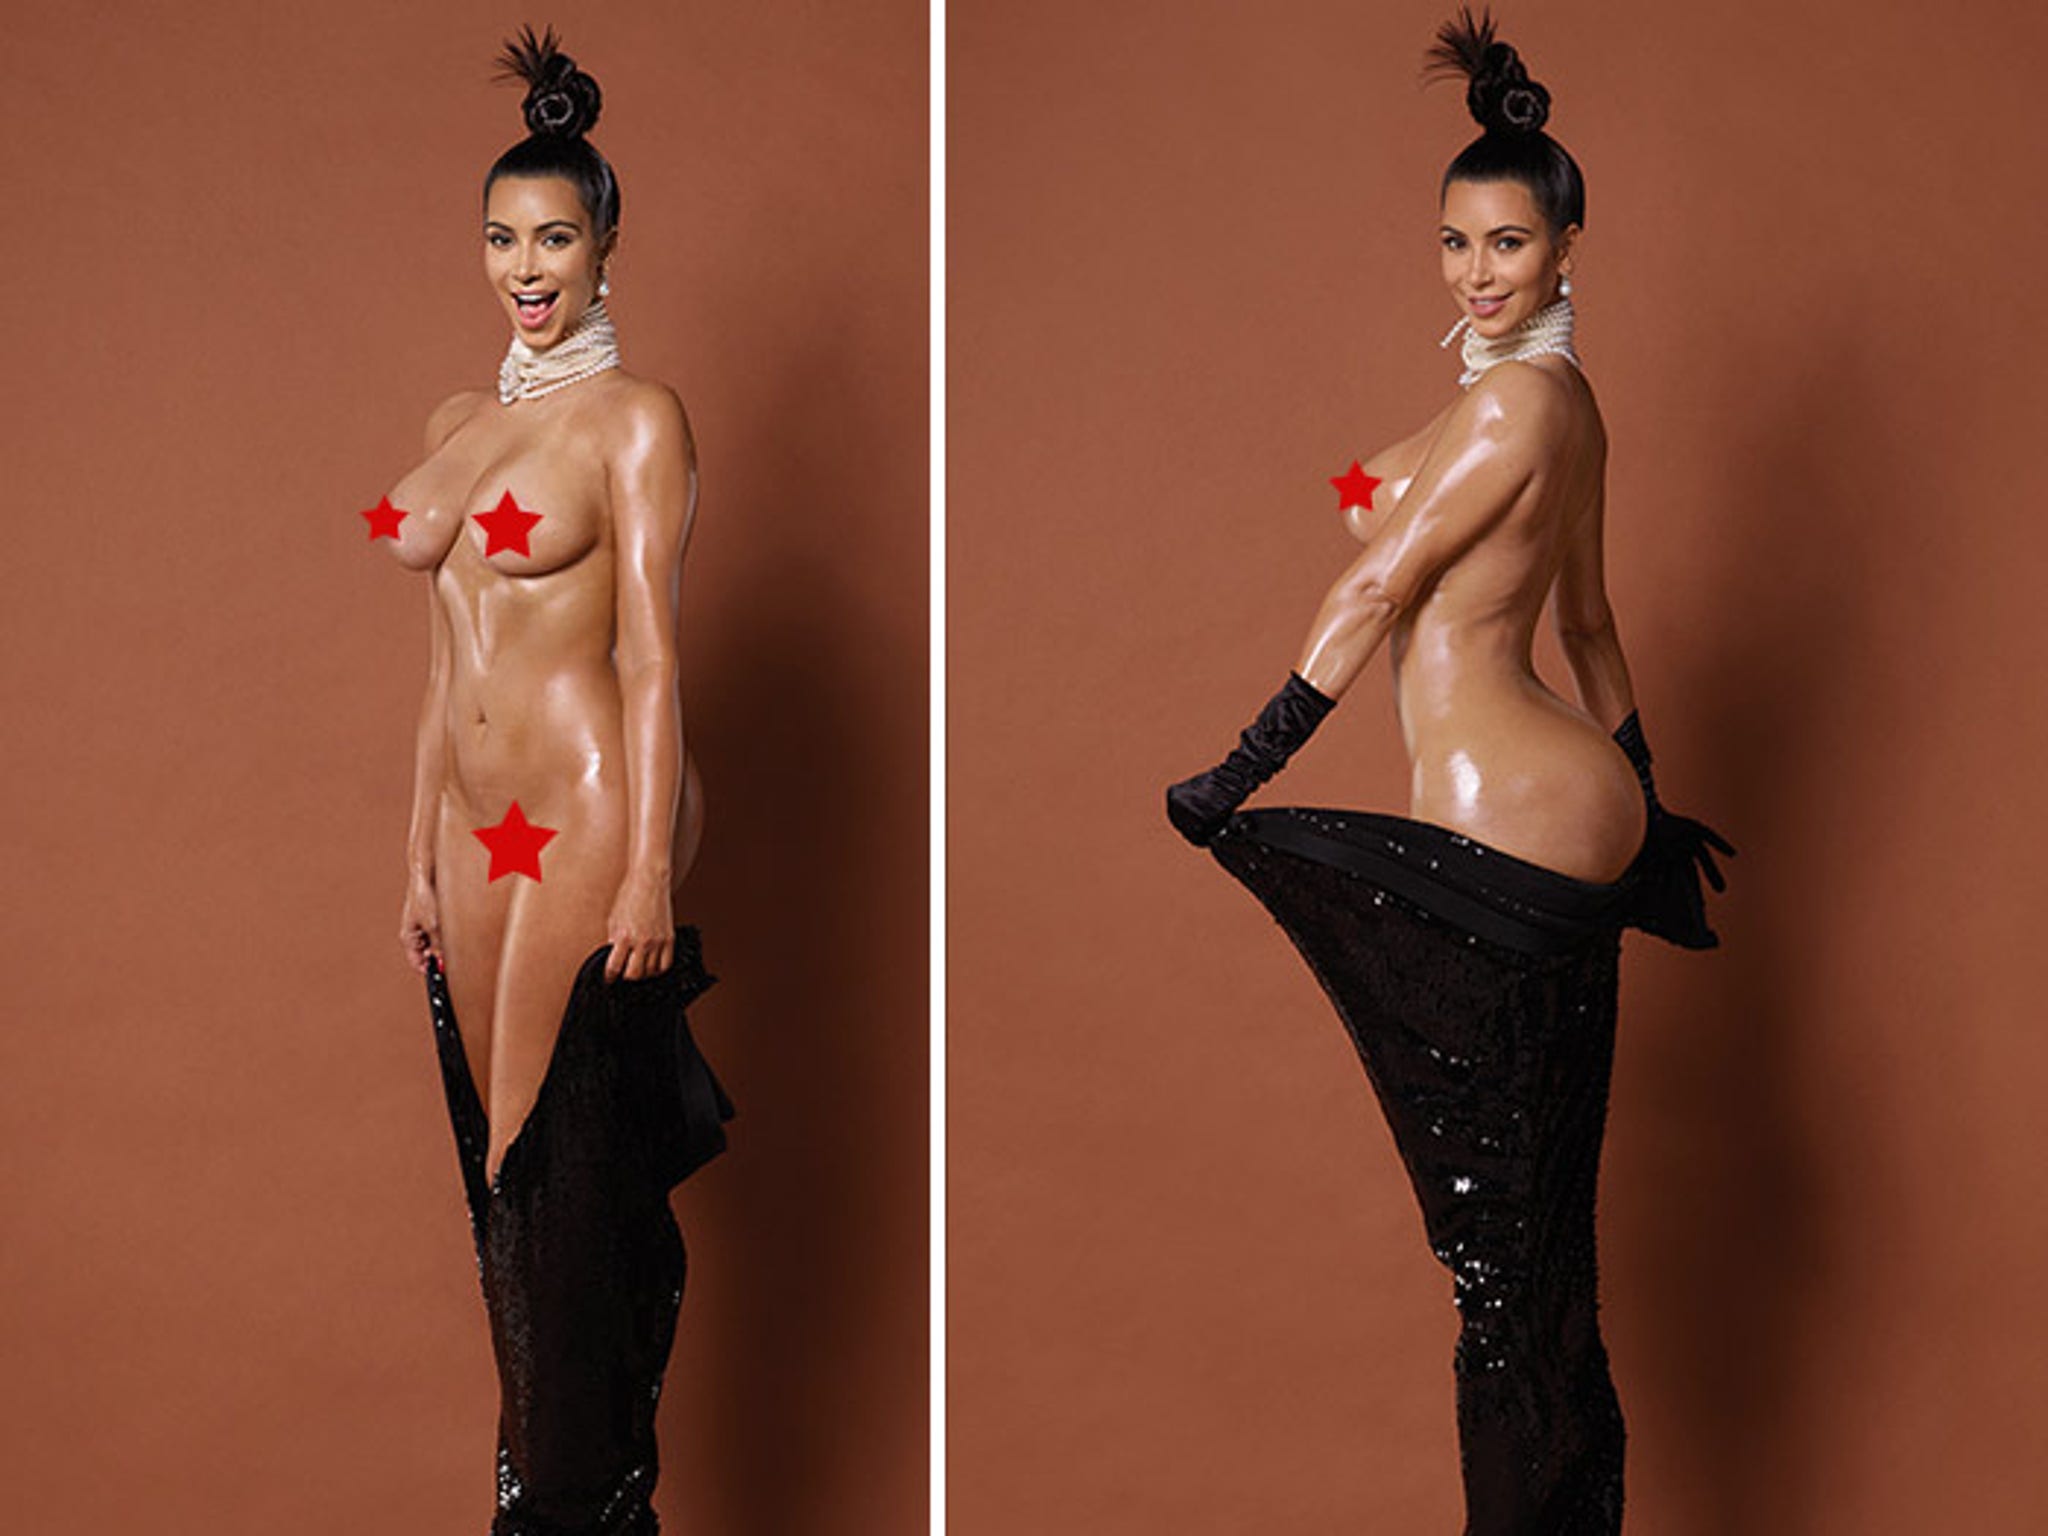 achmedthe deadterrorist recommends Kim Kardashian Naked Shoot